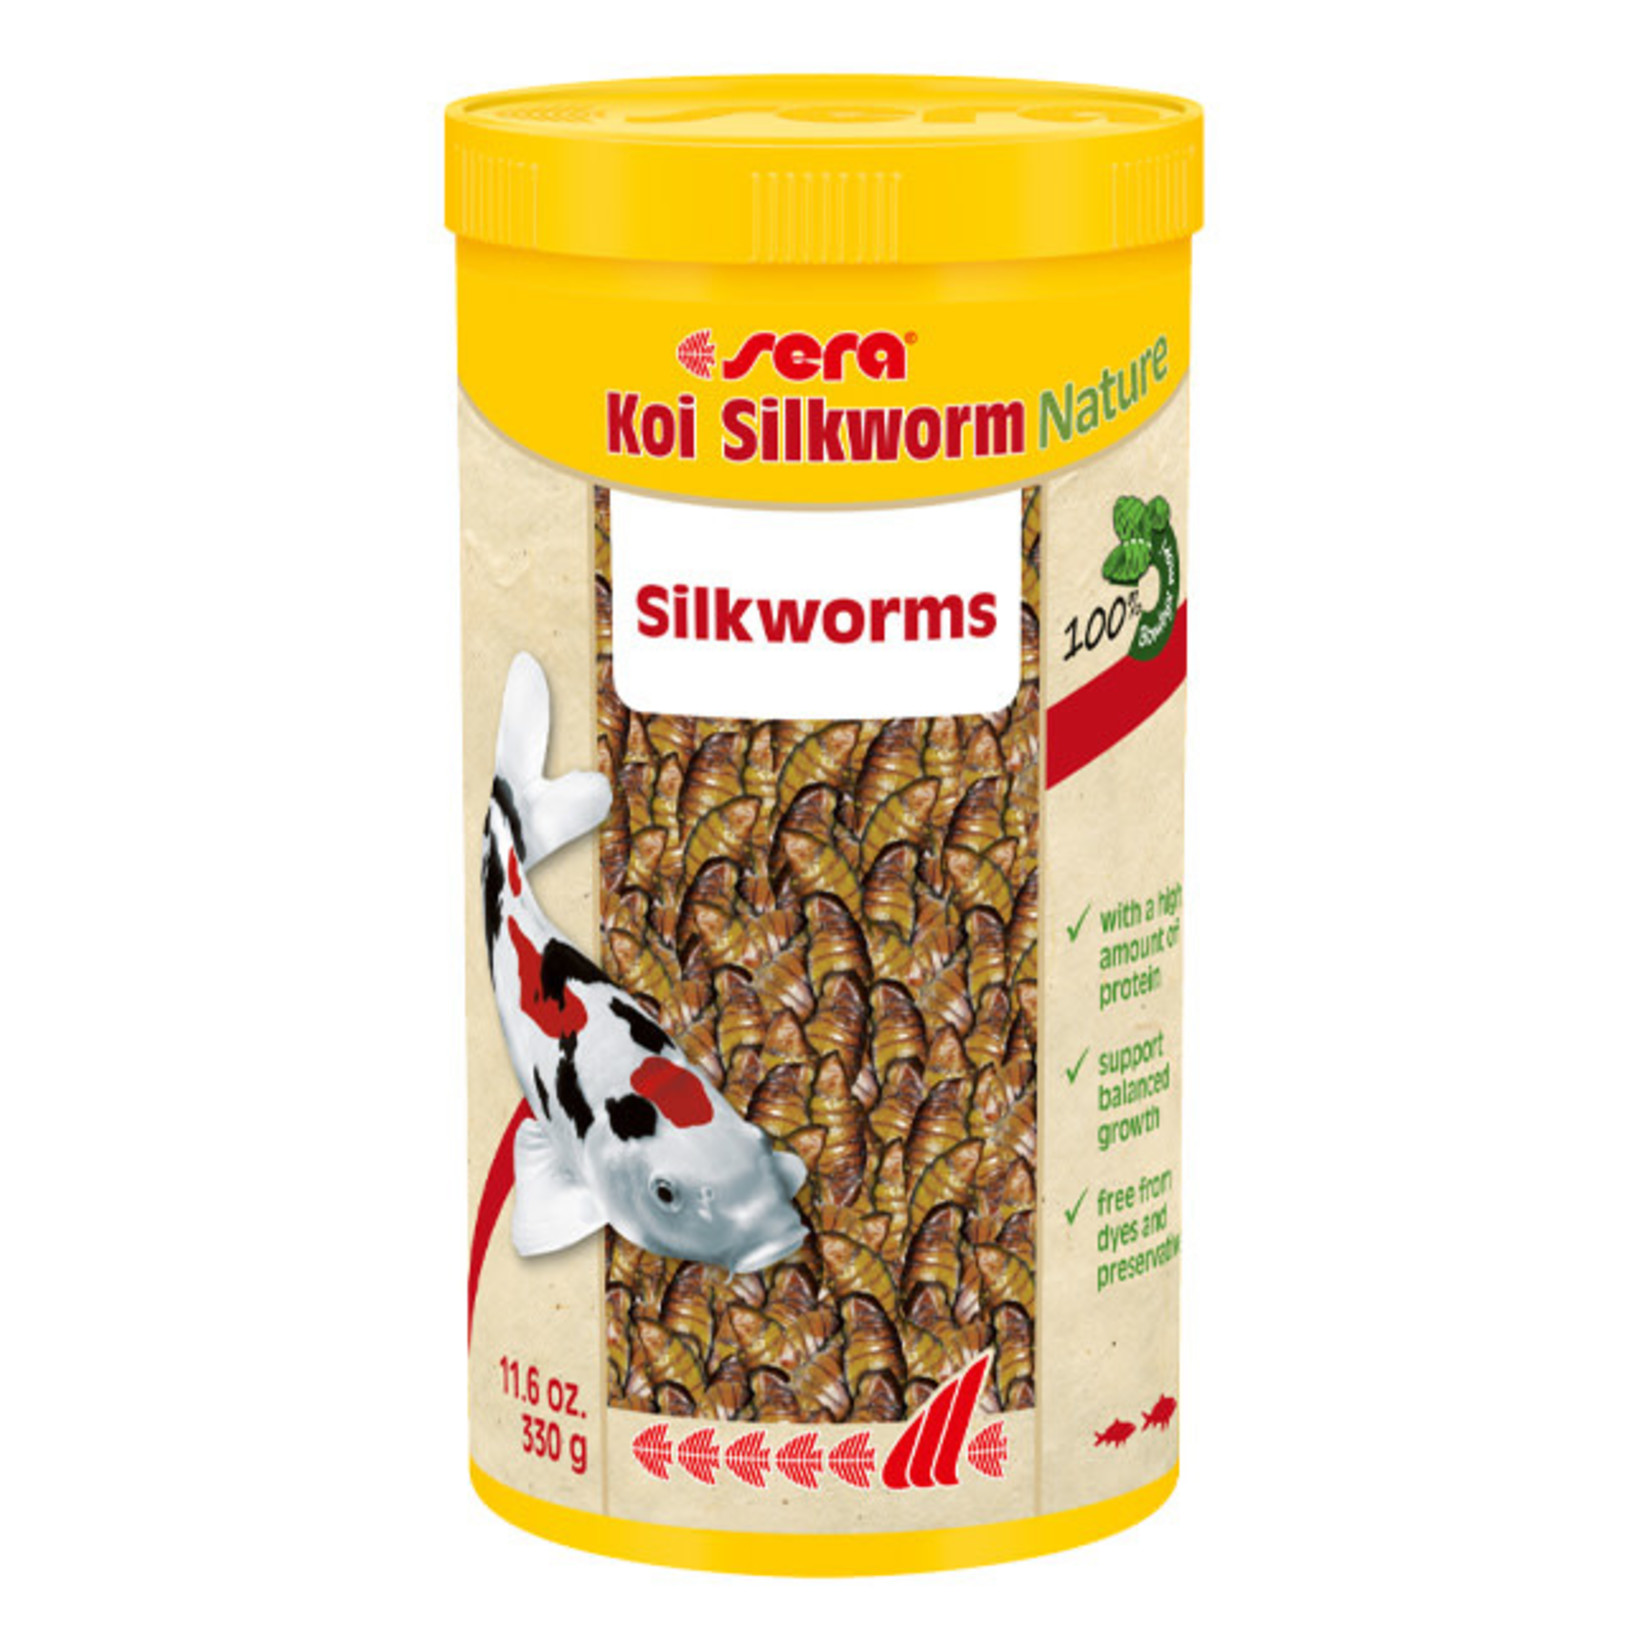 sera sera Koi Silkworm Nature Silkworm Treats 330g / 11.6oz